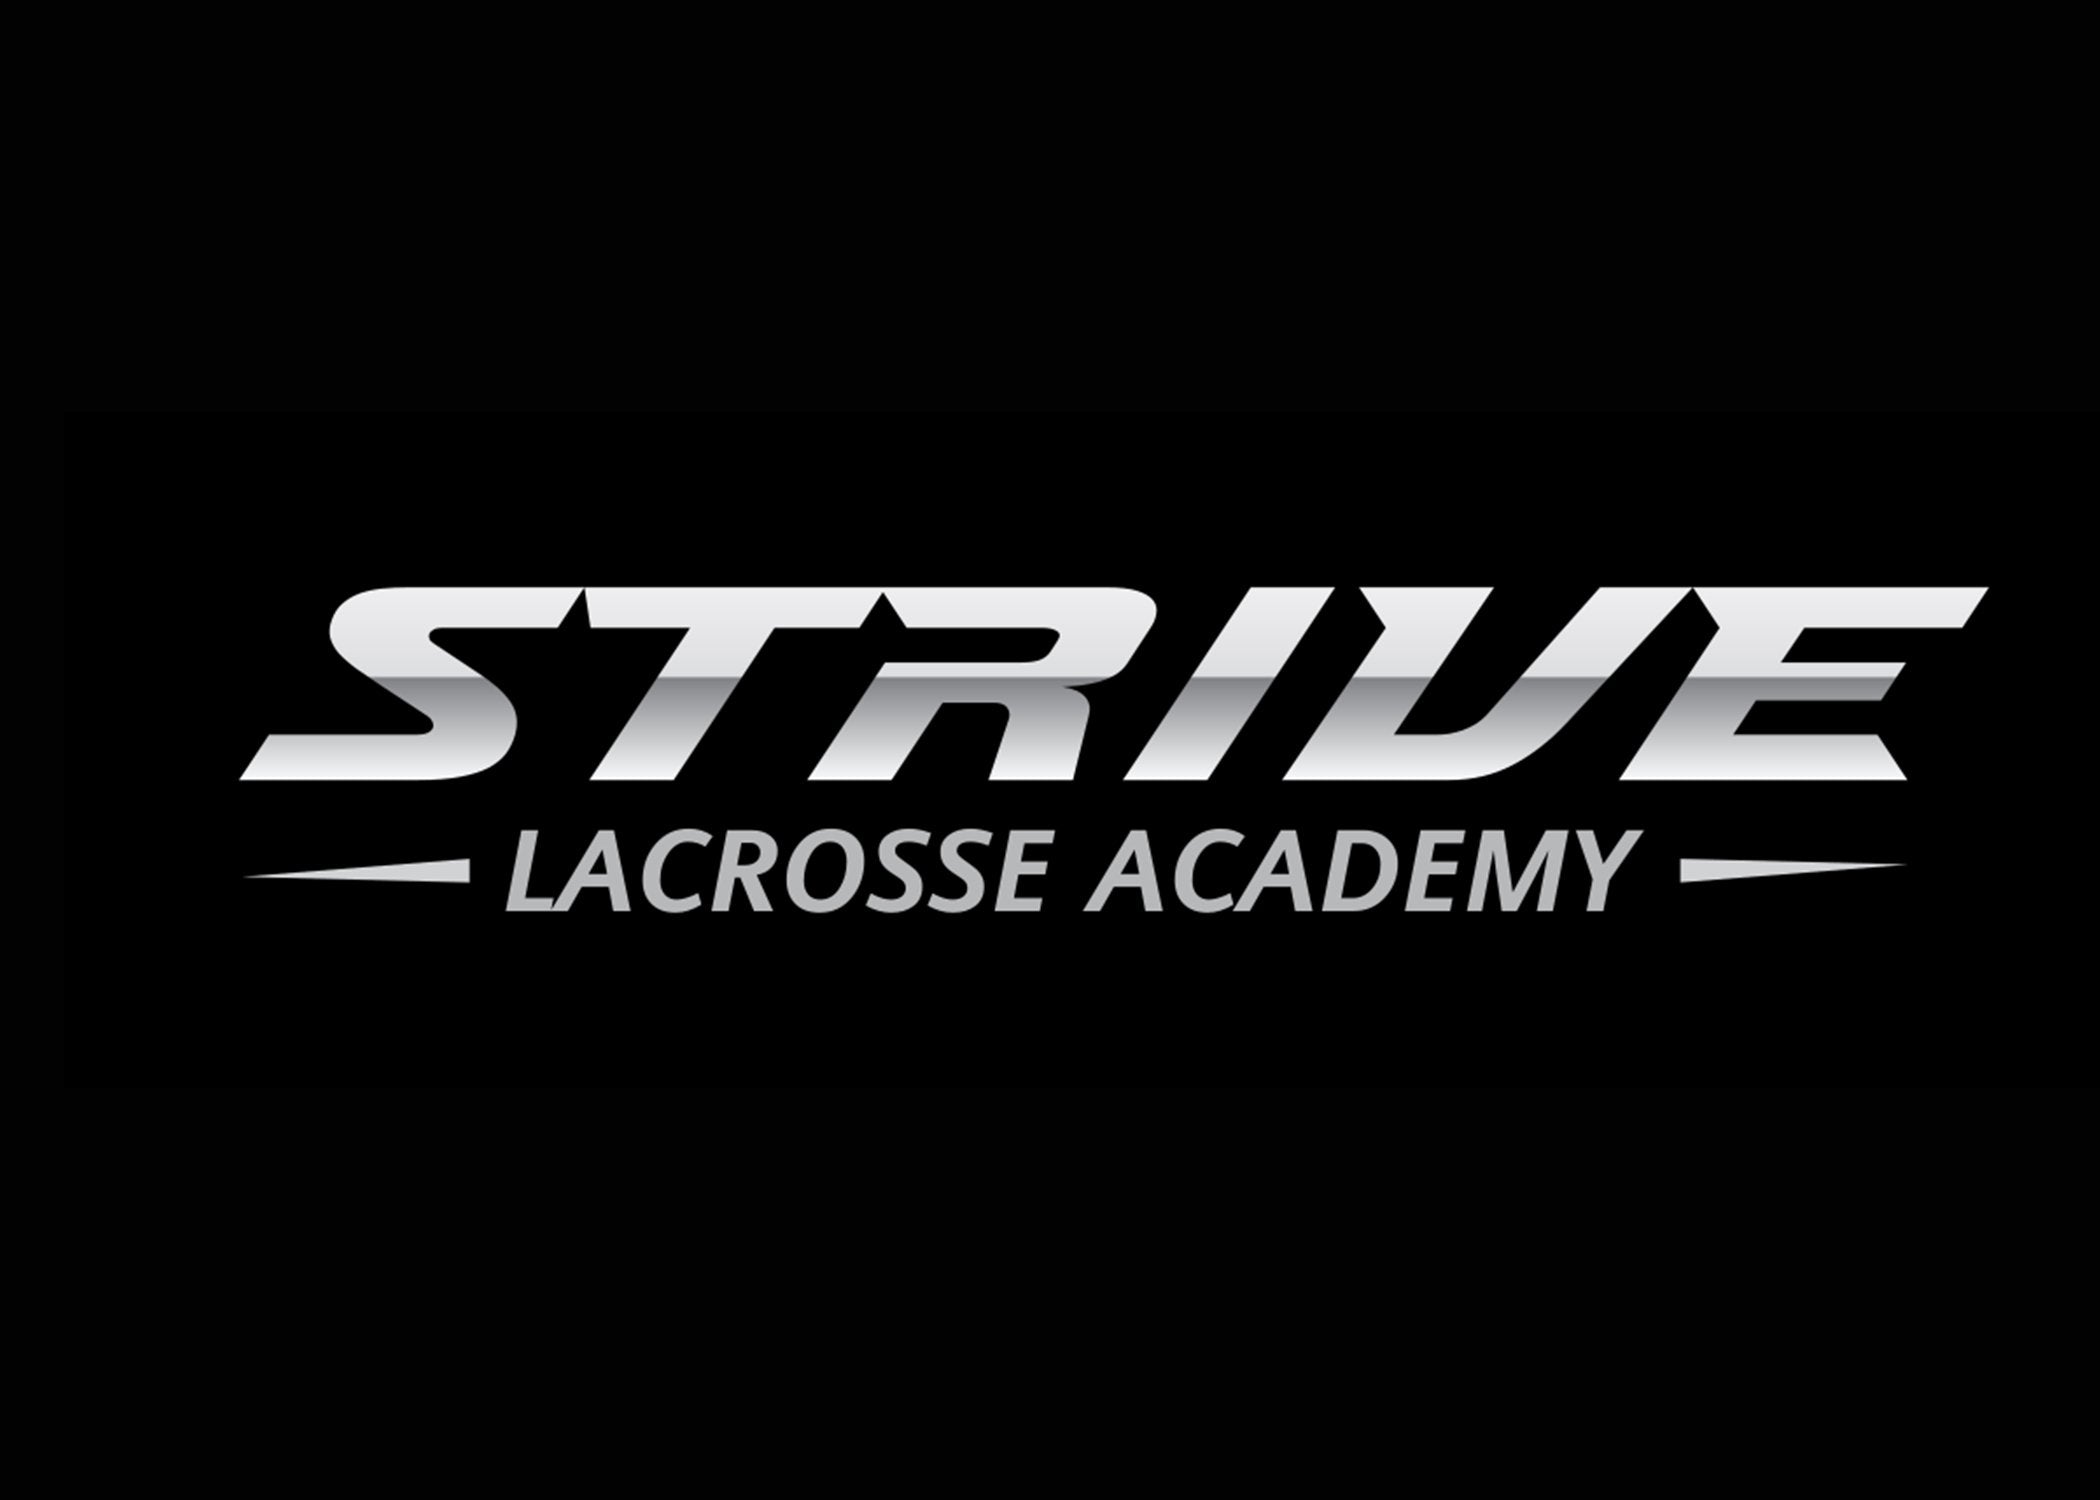 Strive Lacrosse Academy